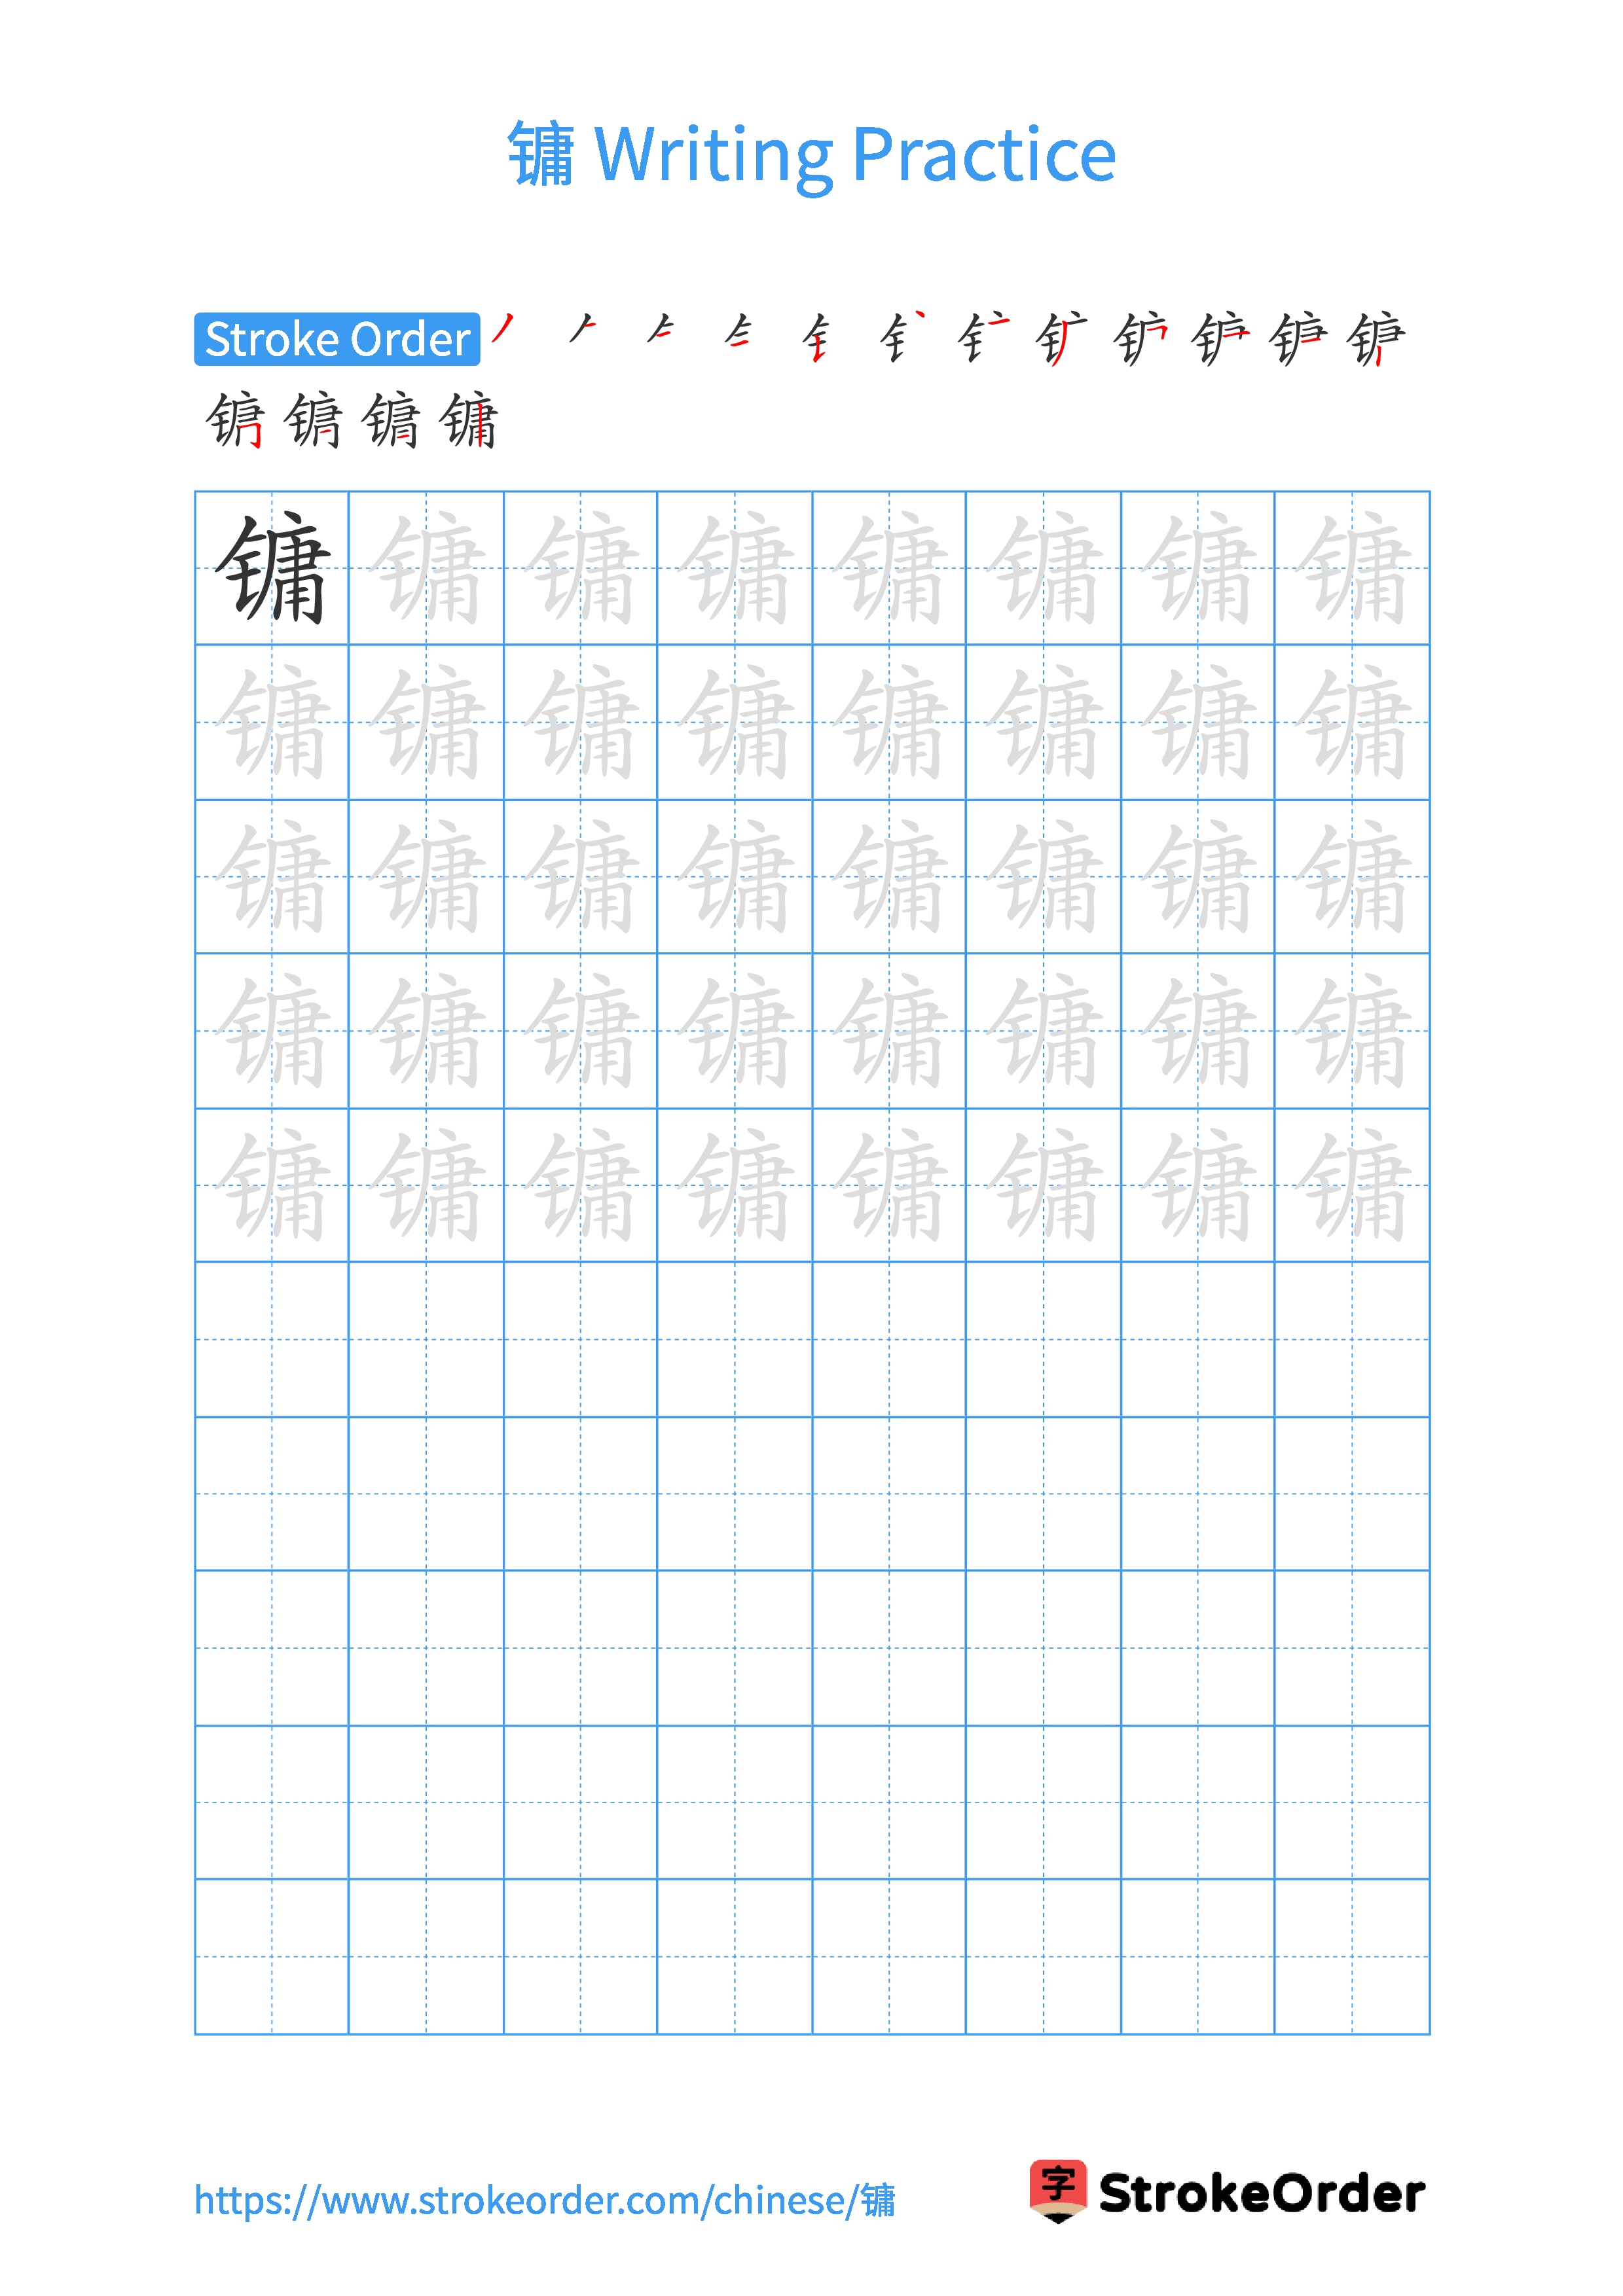 Printable Handwriting Practice Worksheet of the Chinese character 镛 in Portrait Orientation (Tian Zi Ge)